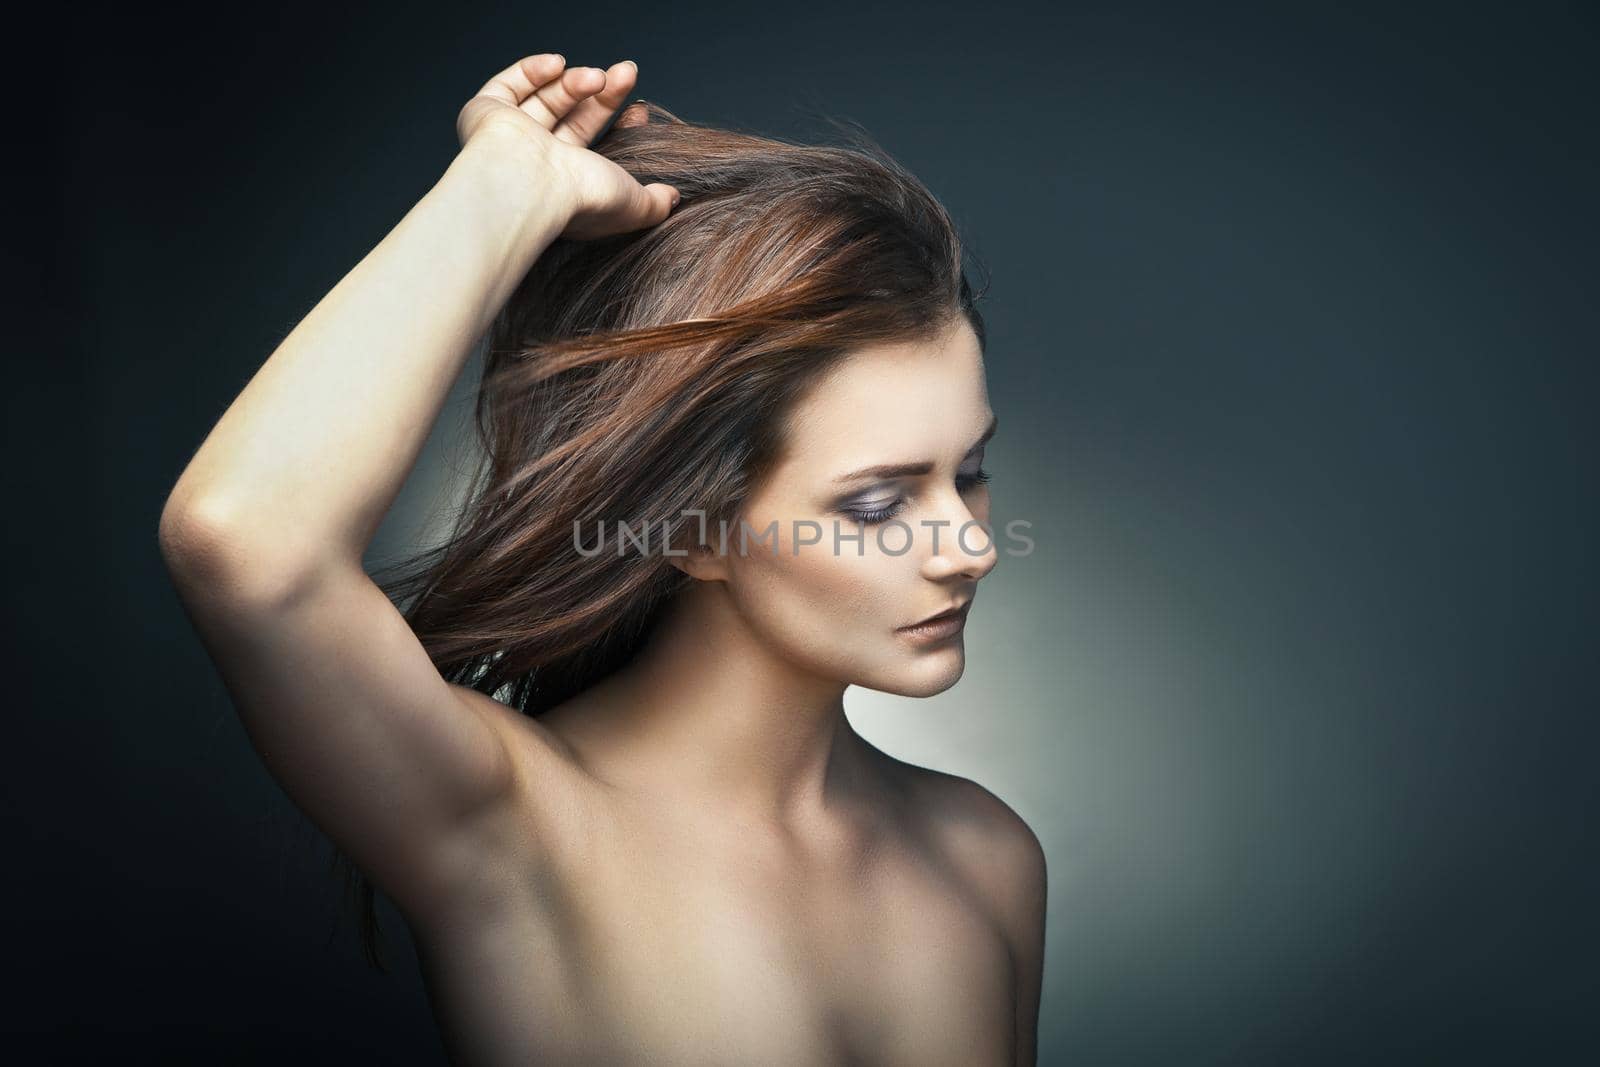 Sensual woman with beautiful long brown hairs by Julenochek